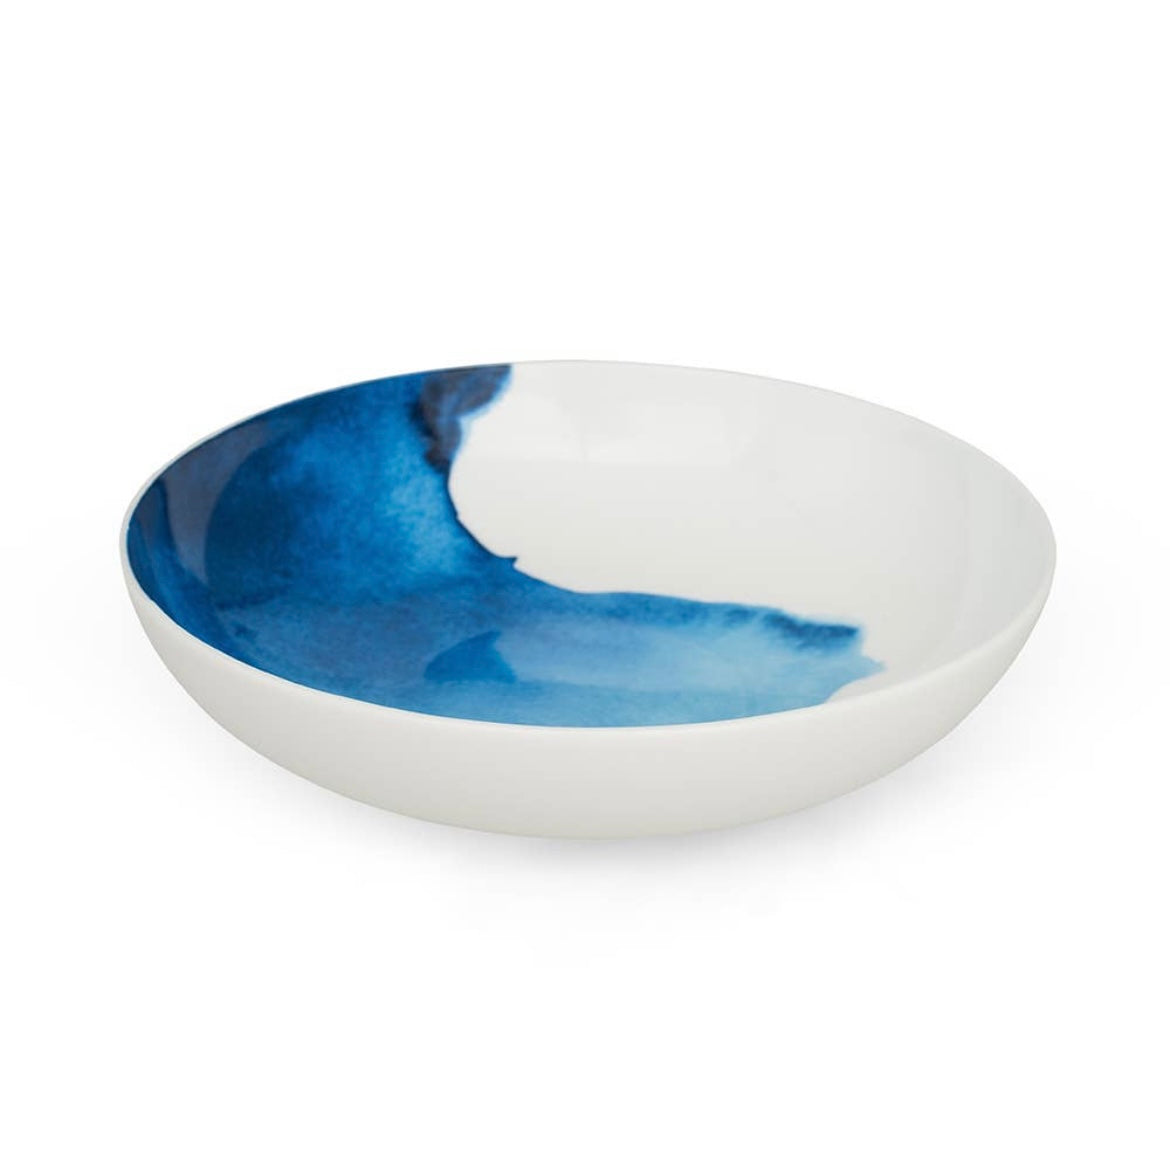 Rick Stein ‘Coves’ Blue/White Supper Bowl